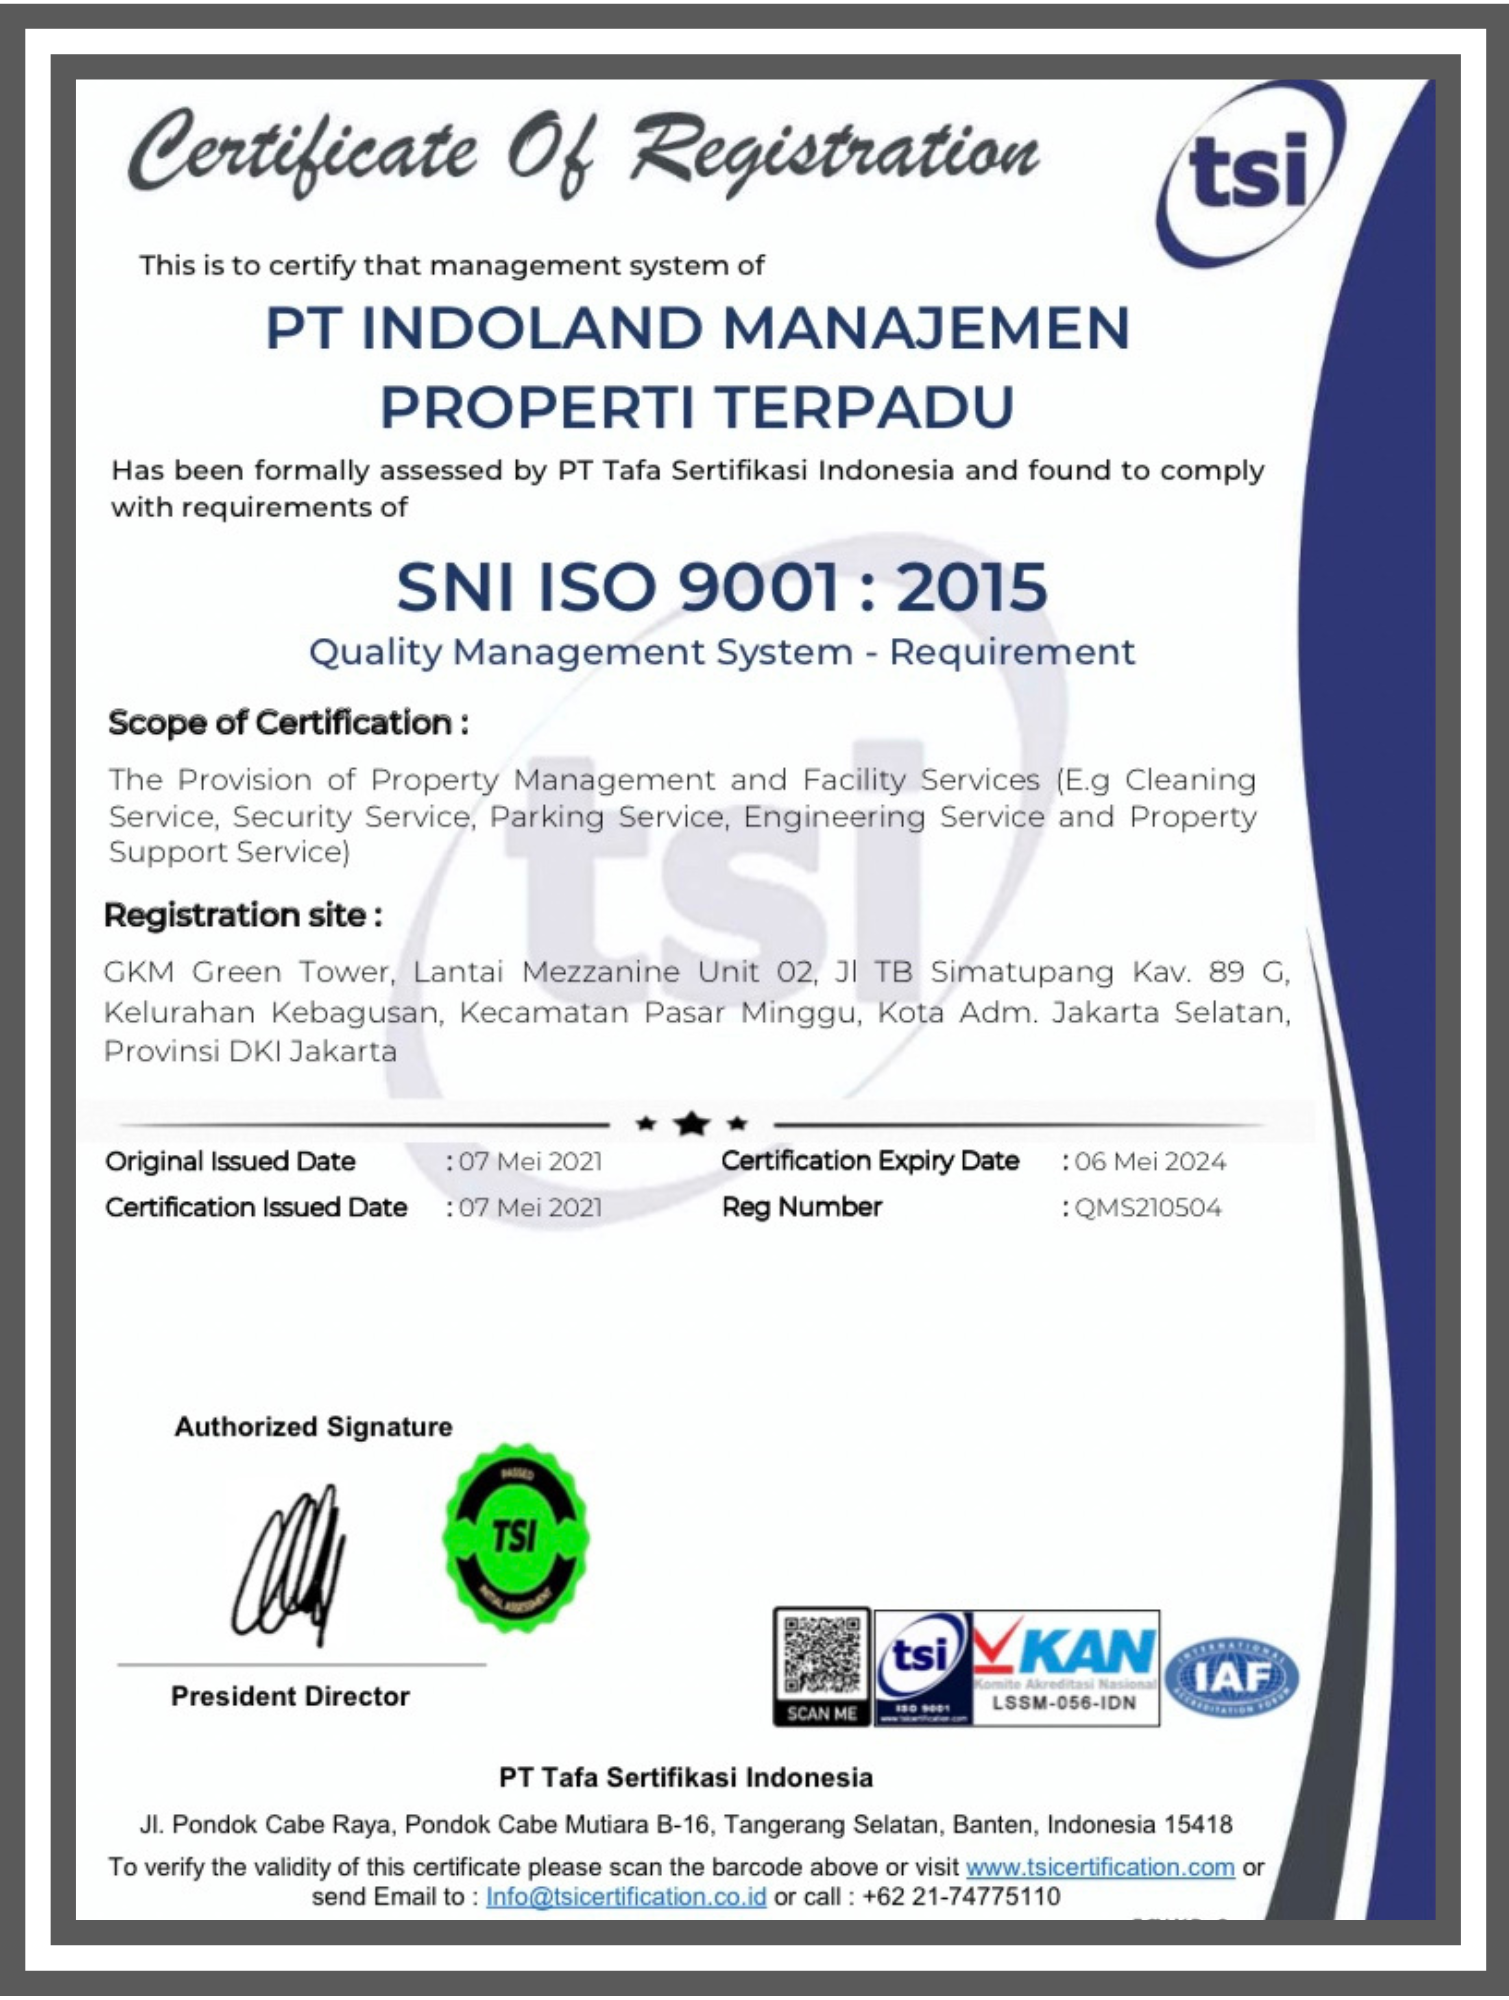 ISO 9001: 2015 Indoland